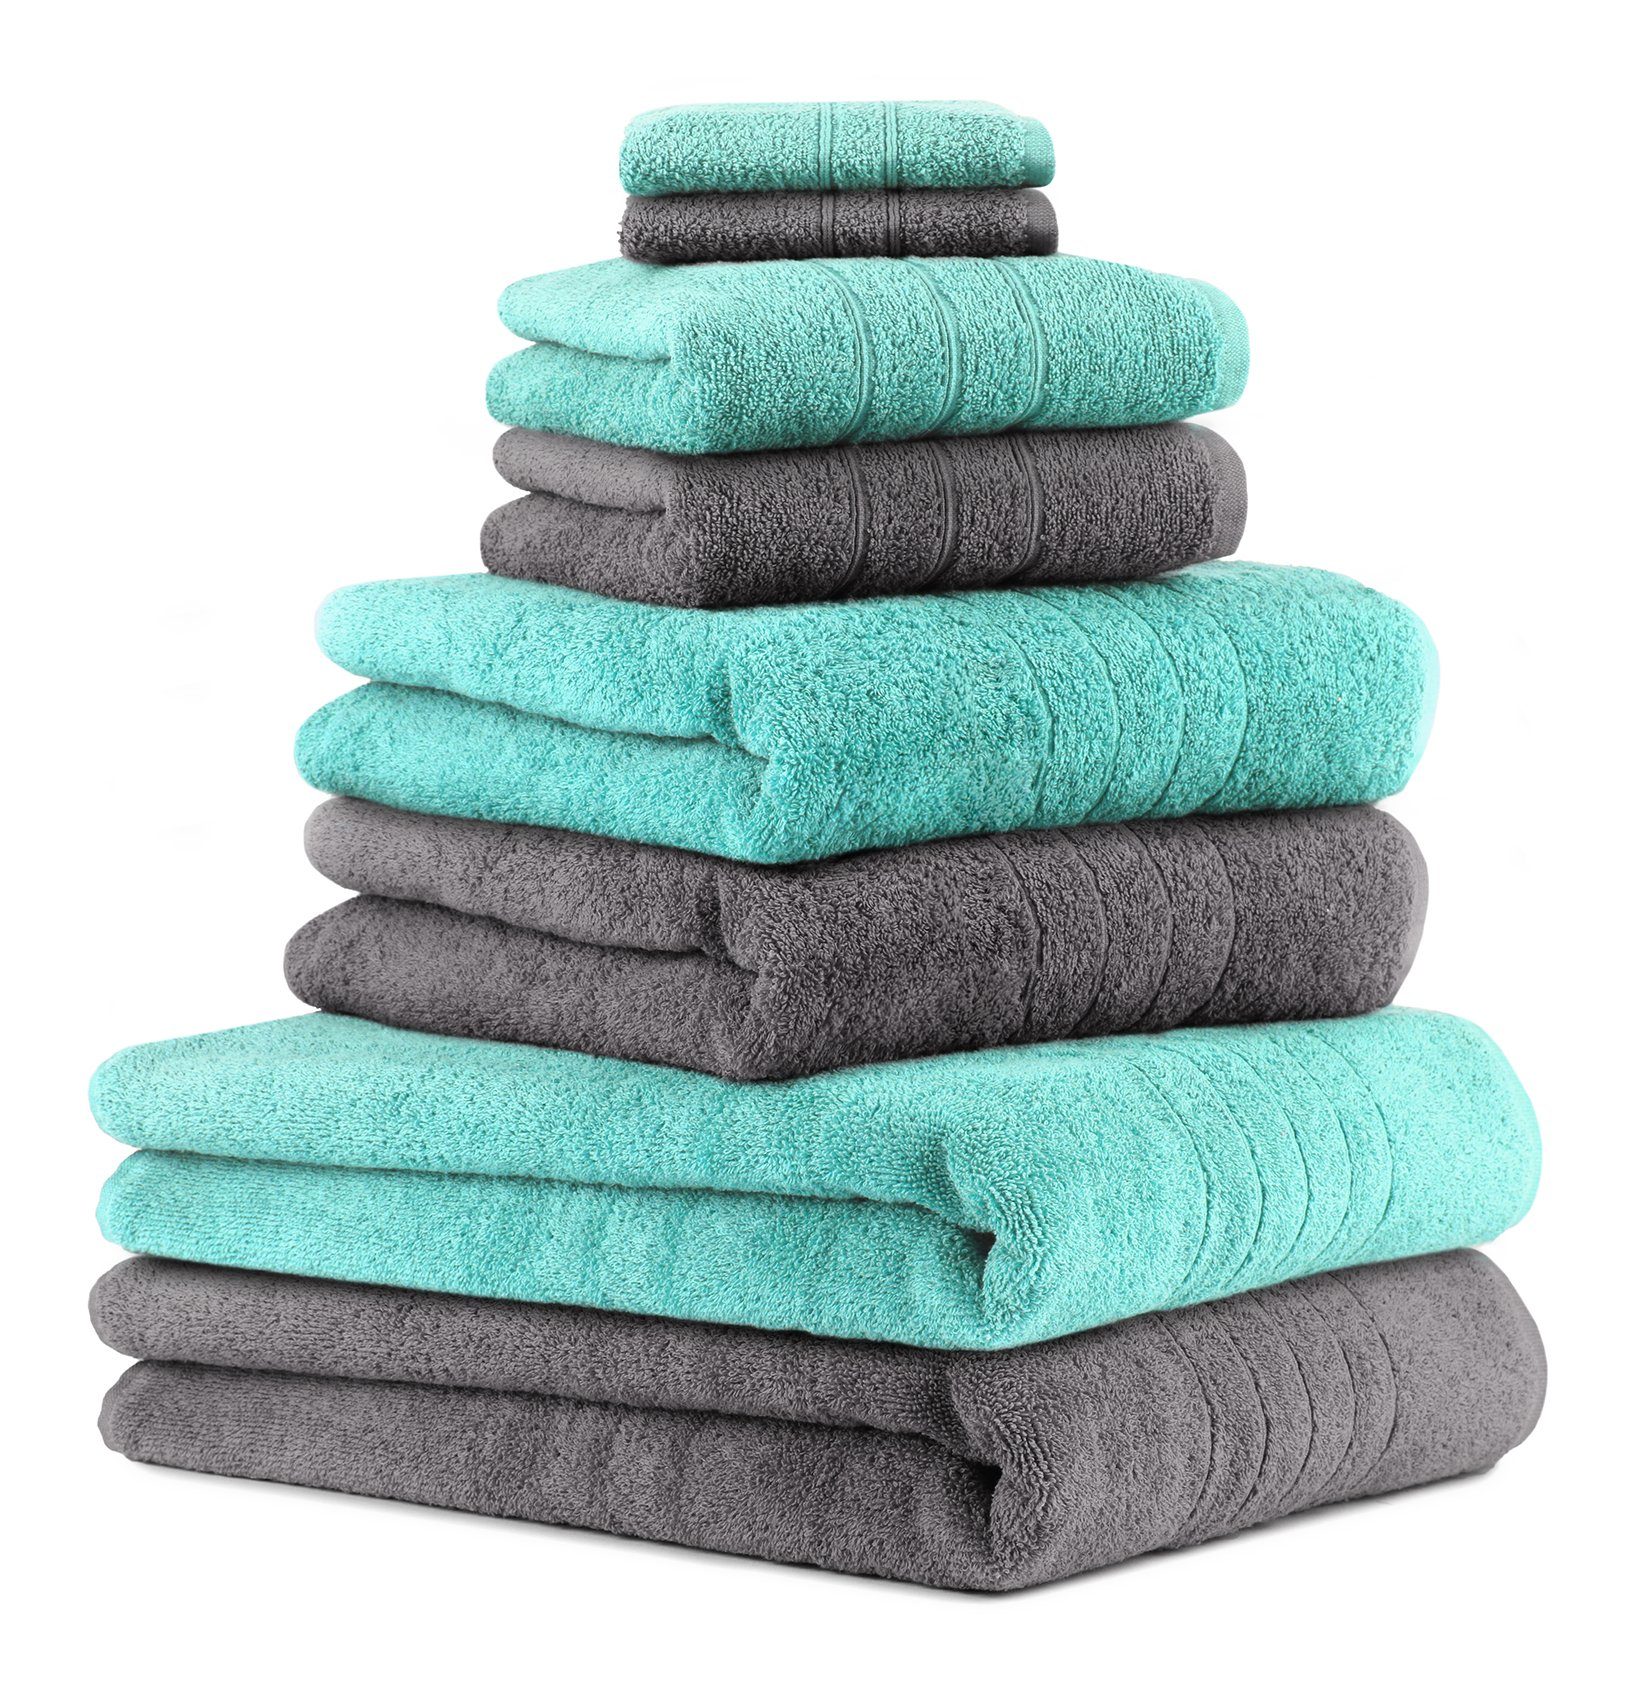 Betz Handtuch Set 8-TLG. Handtuch-Set Deluxe 100% Baumwolle 2 Badetücher 2  Duschtücher 2 Handtücher 2 Seiftücher Farbe anthrazit grau und türkis, 100%  Baumwolle, (8-tlg) | Handtuch-Sets